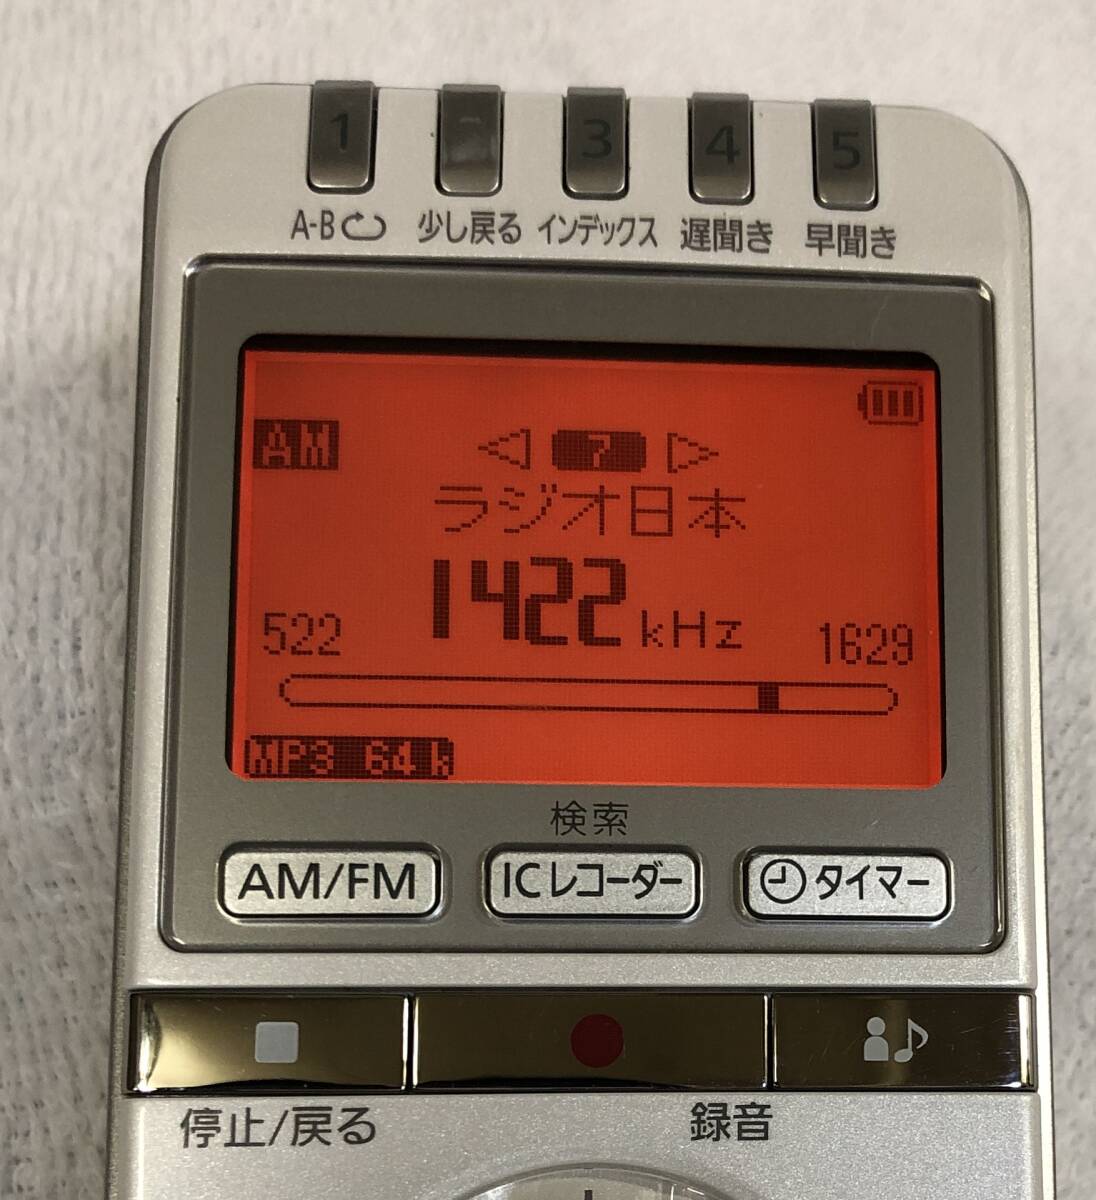 Panasonic IC recorder RR-RS150 operation not yet verification junk..